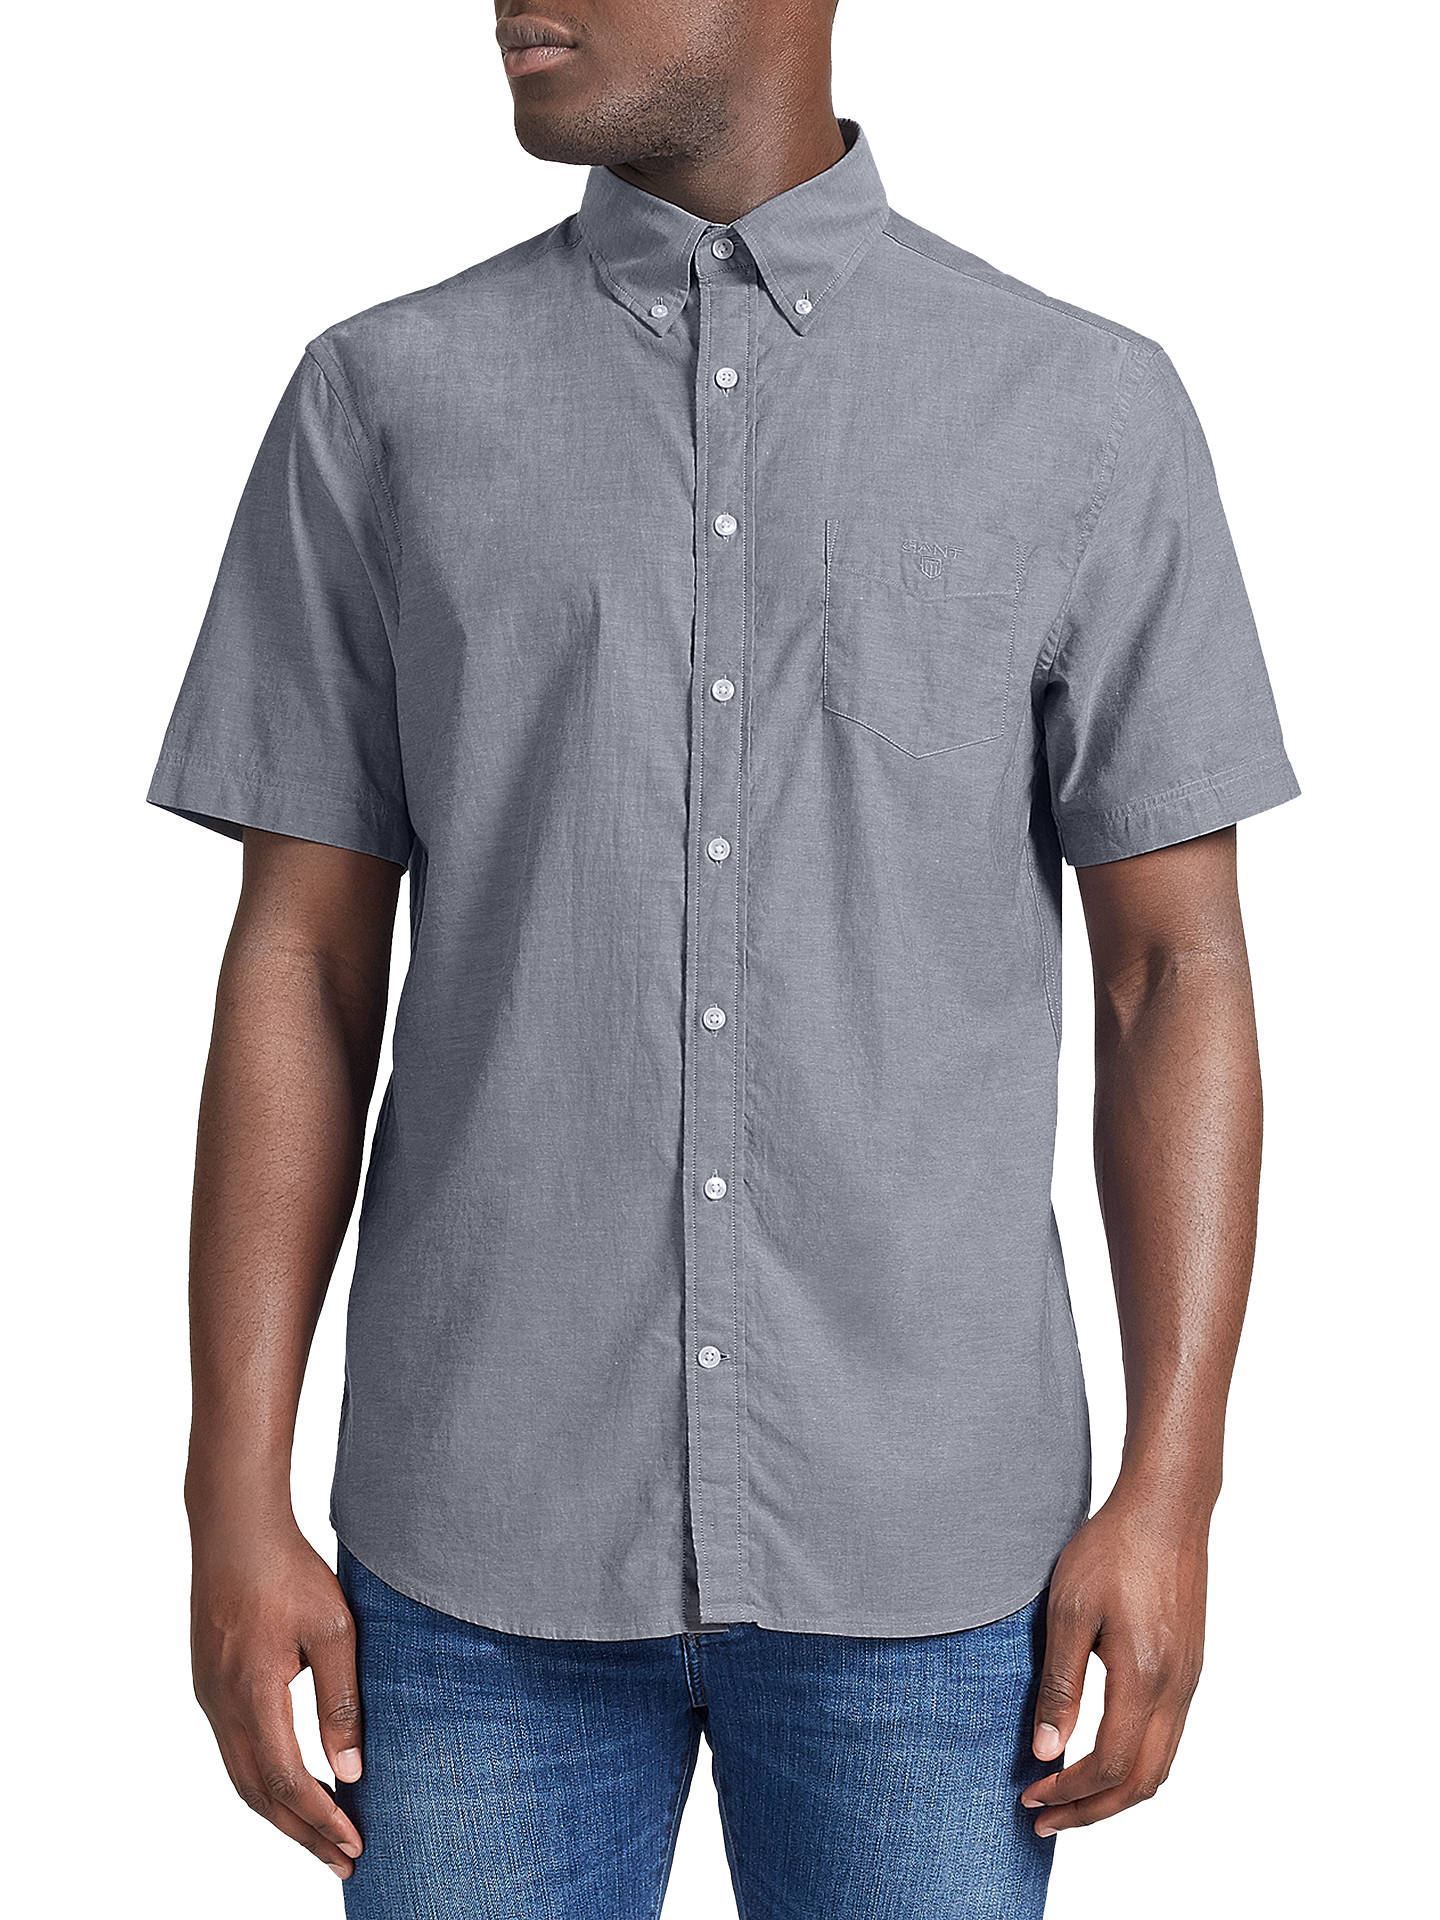 Gant Washed Pinpoint Oxford Short Sleeve Shirt at John Lewis & Partners